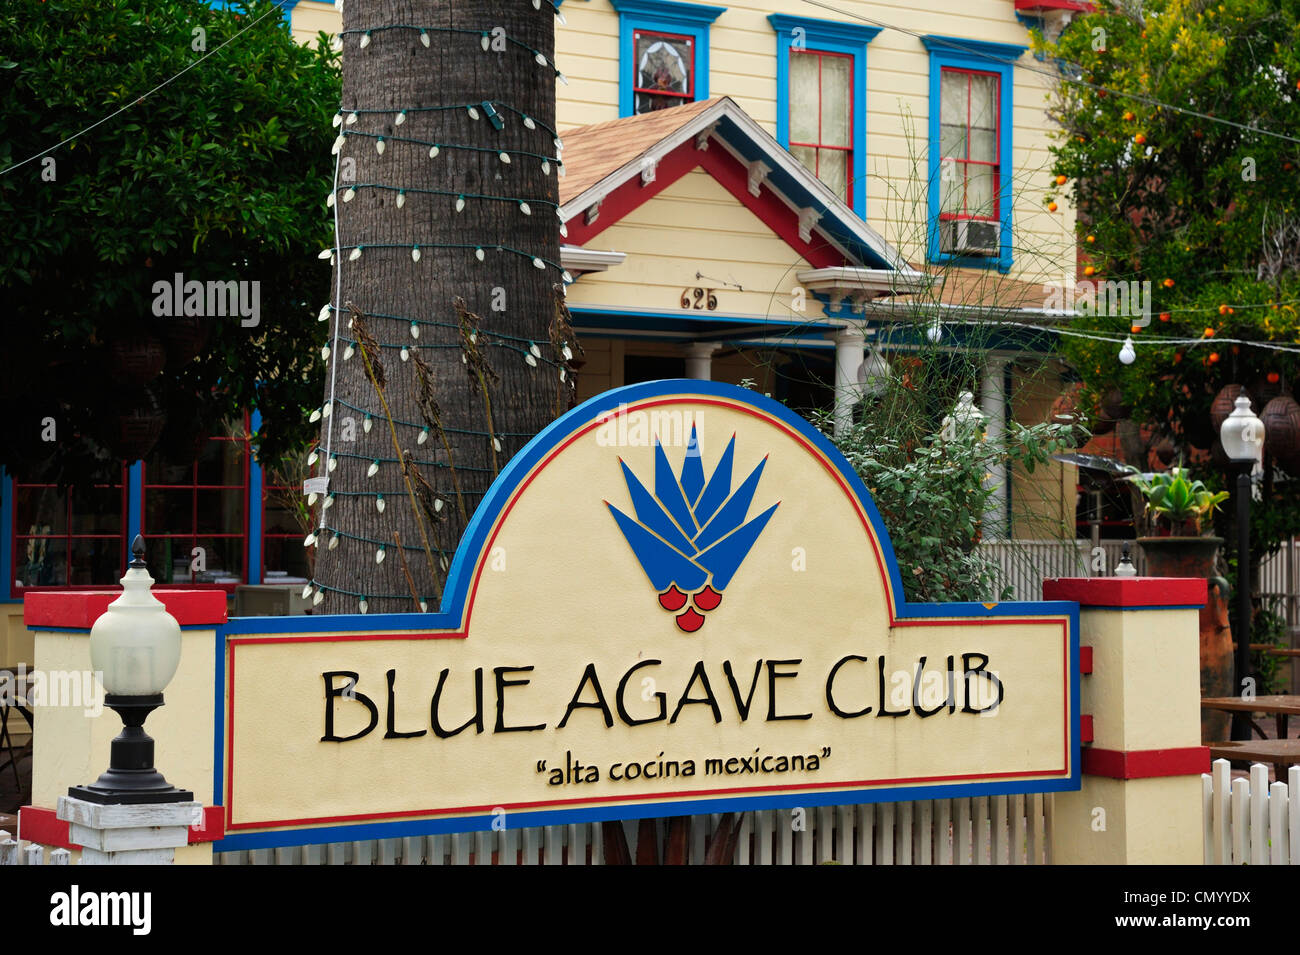 The Blue Agave Club at Pleasanton, CA Stock Photo